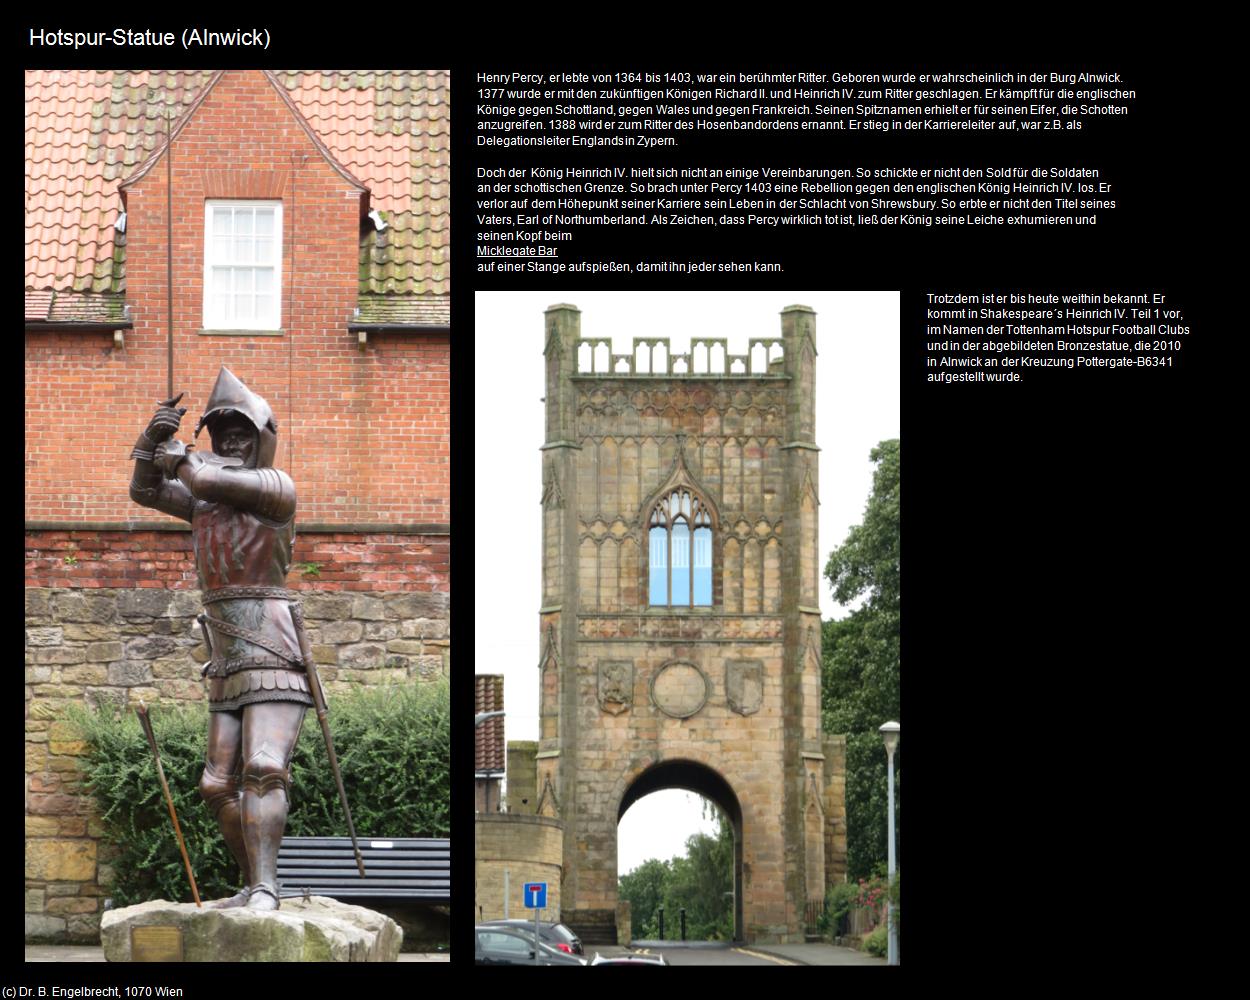 Hotspur Statue   (Alnwick, England) in Kulturatlas-ENGLAND und WALES(c)B.Engelbrecht